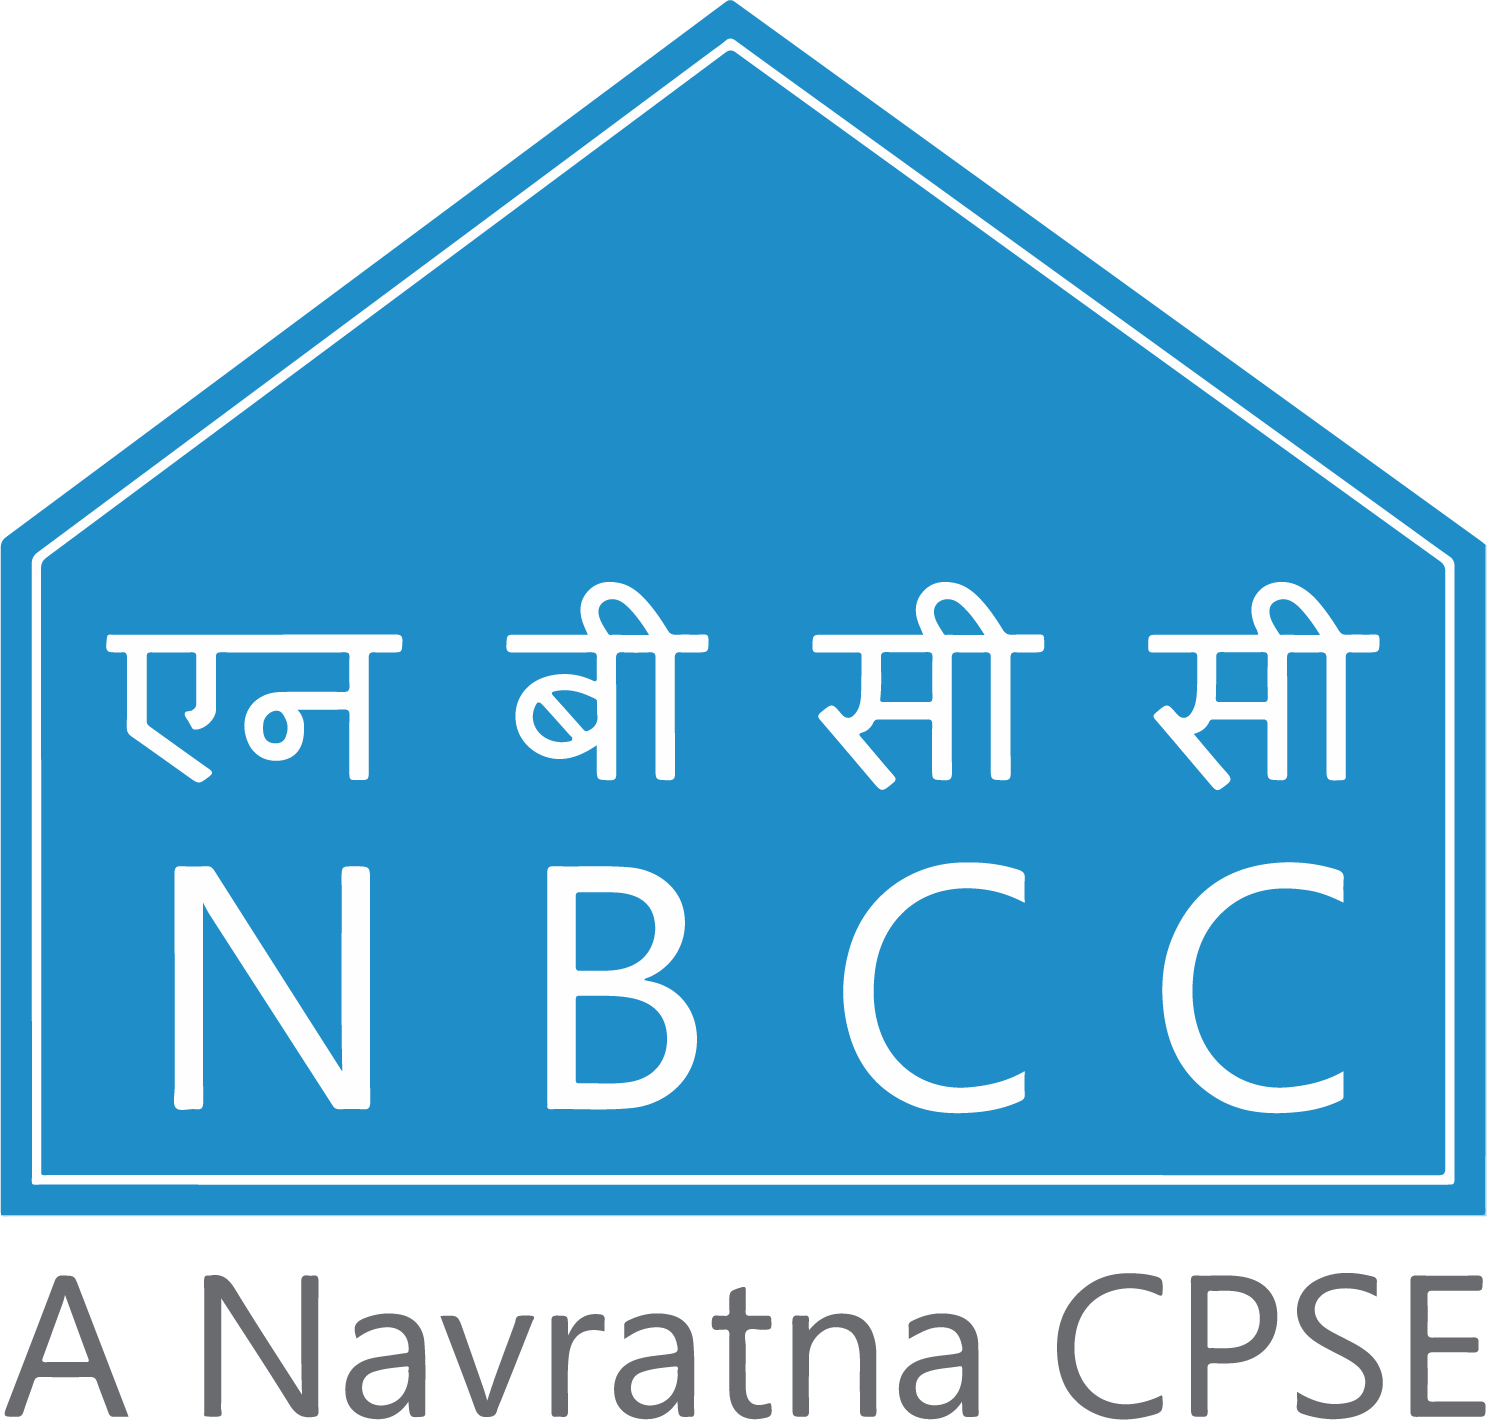 NBCC India logo large (transparent PNG)